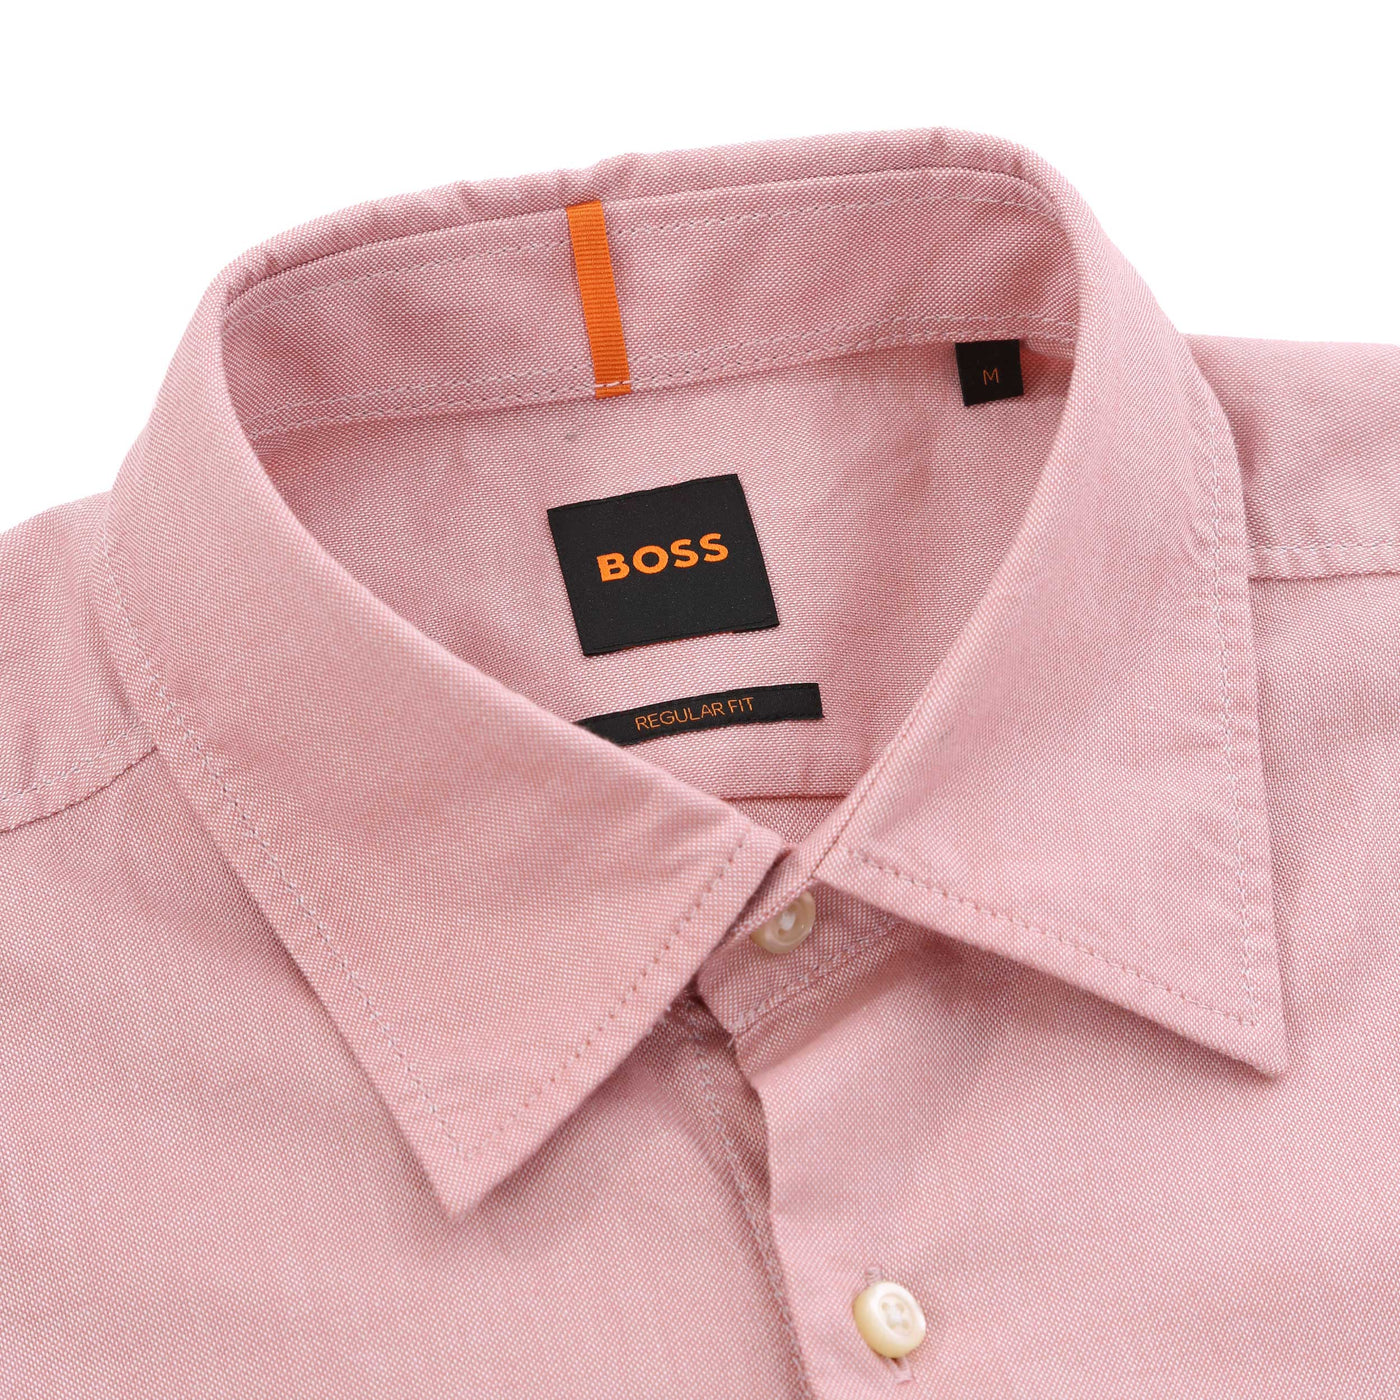 BOSS Rash 2 Short Sleeve Shirt in Pink Collar